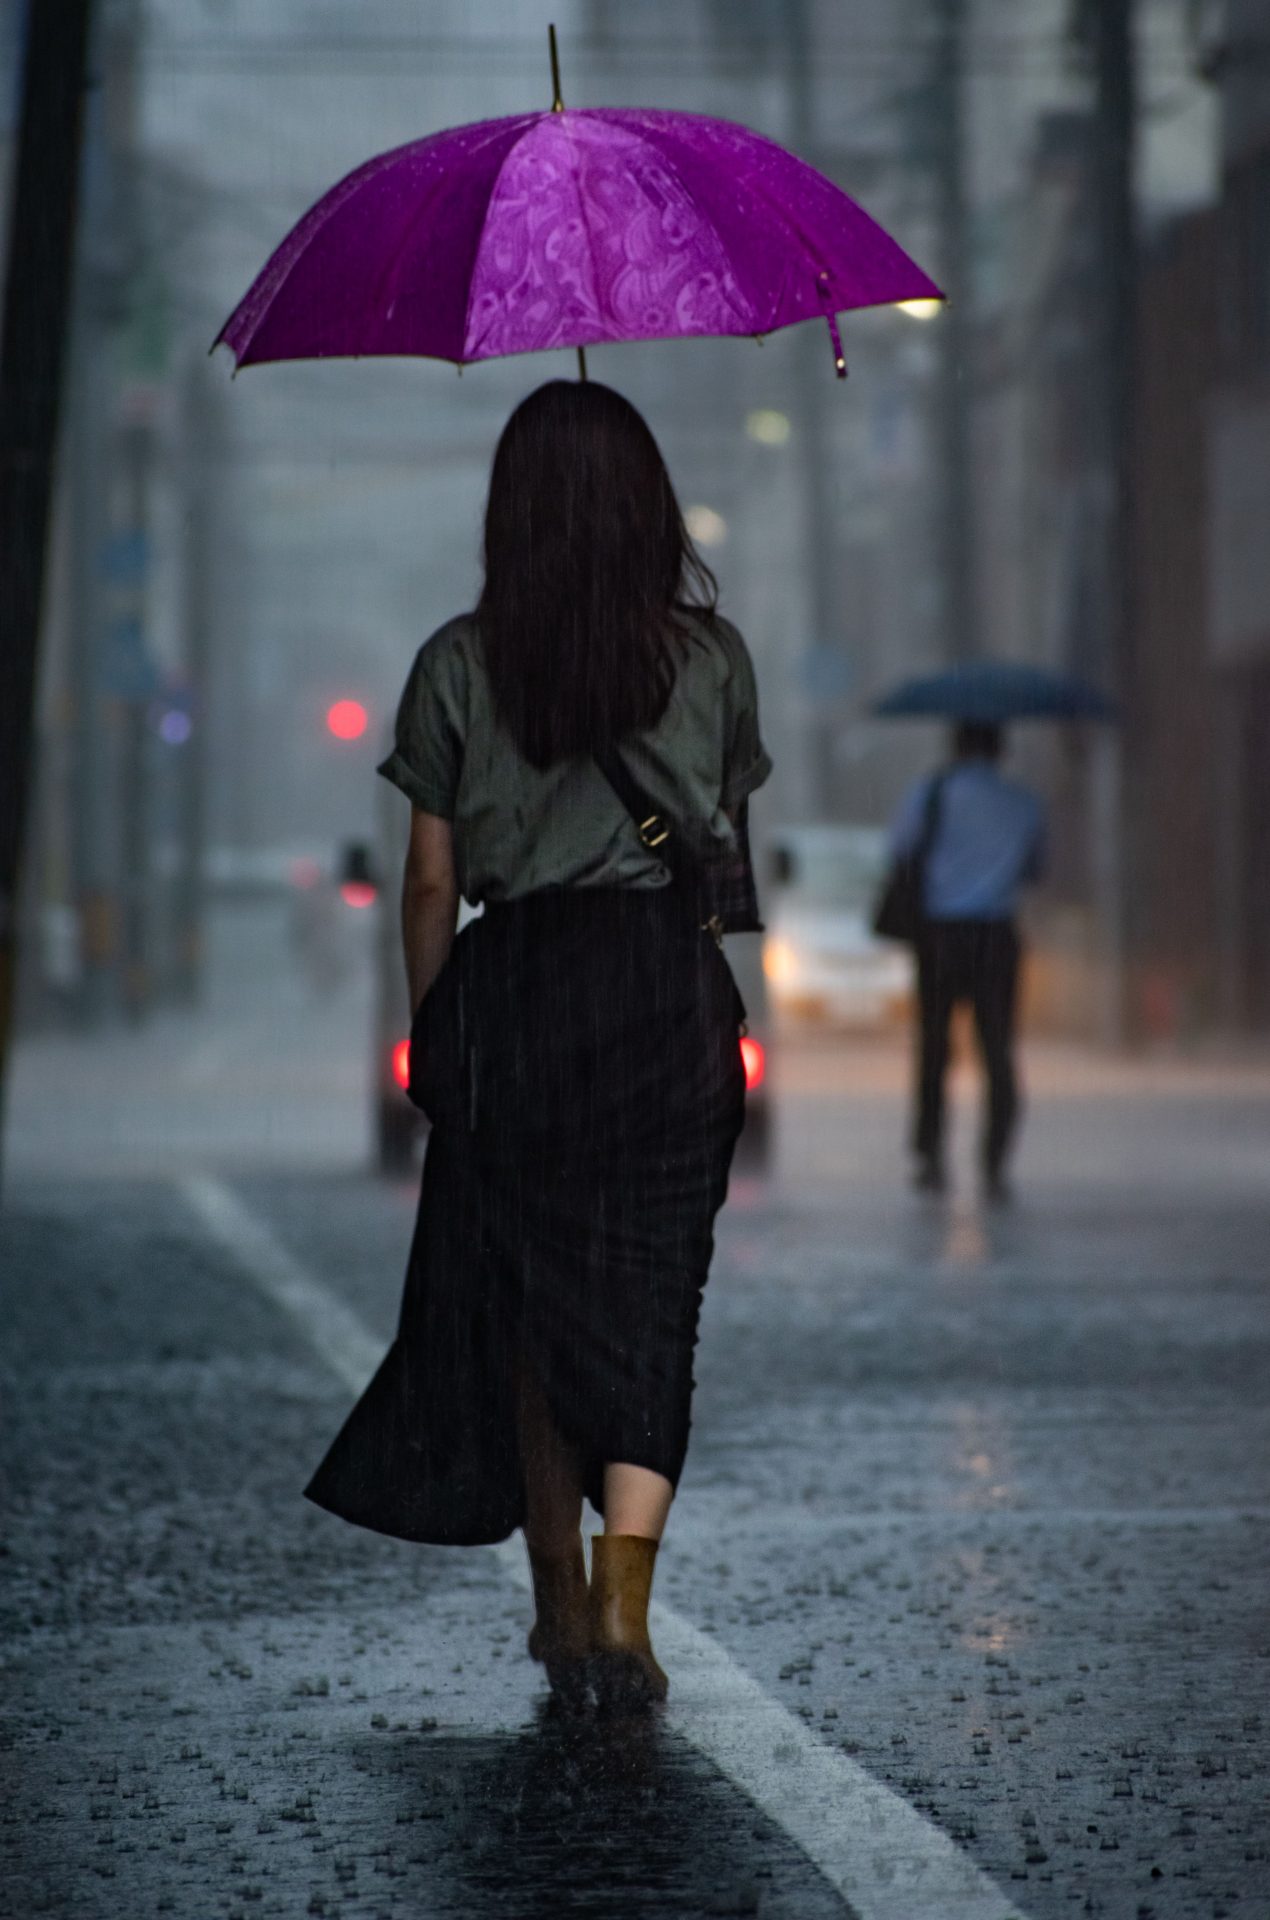 A women with purple umbrella walking in a heavy rainfaill, Hiroshima